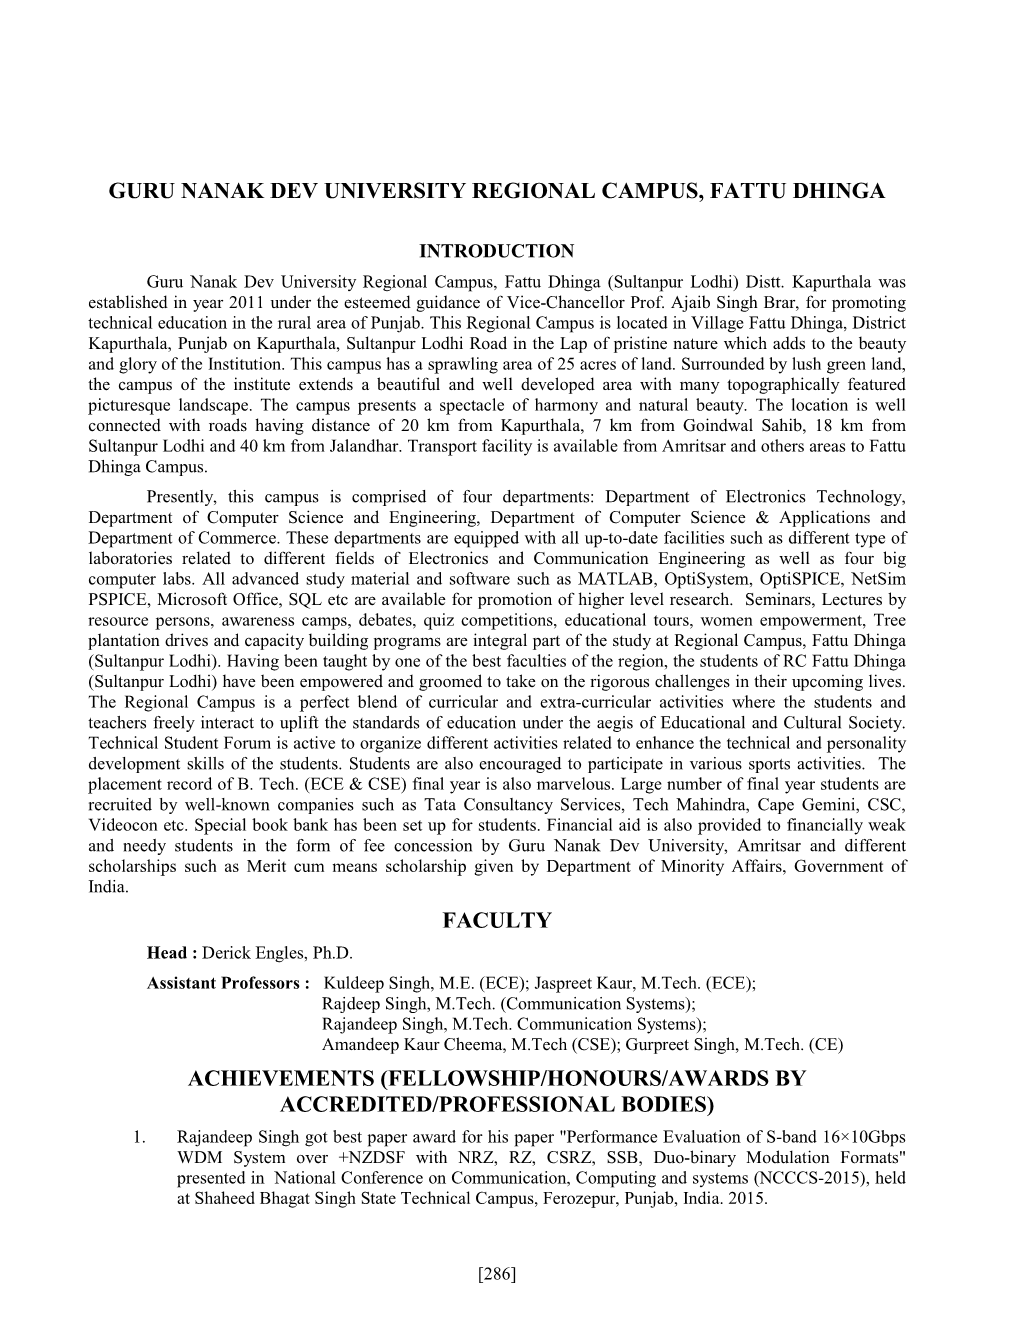 Guru Nanak Dev University Regional Campus, Fattu Dhinga